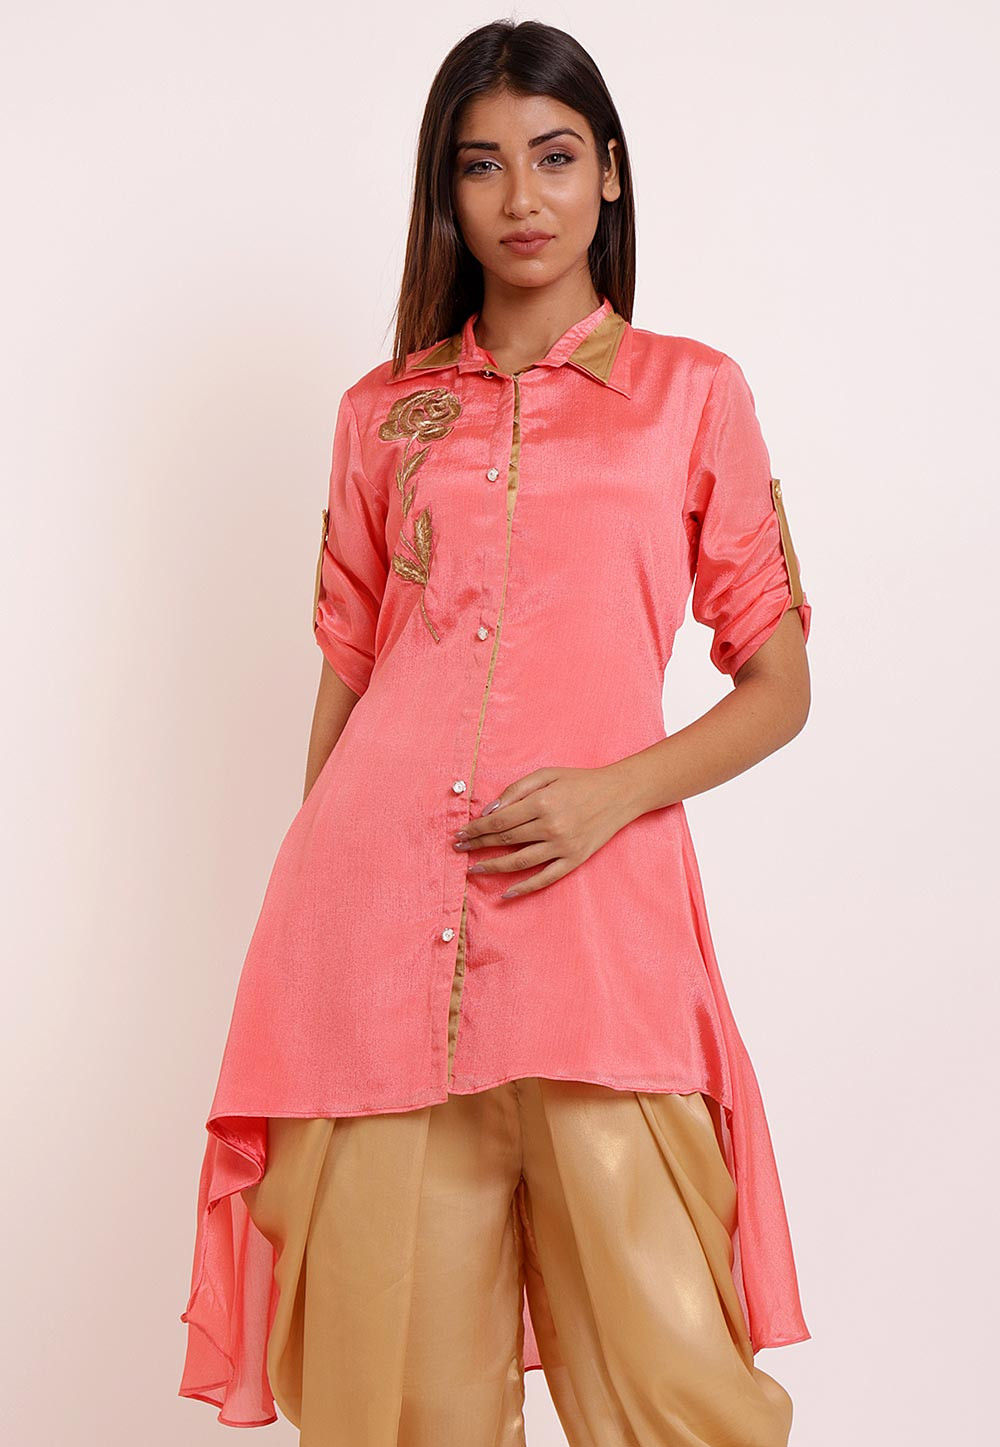 High low kurti | Dresses with leggings, Fashion dresses, Stylish dresses